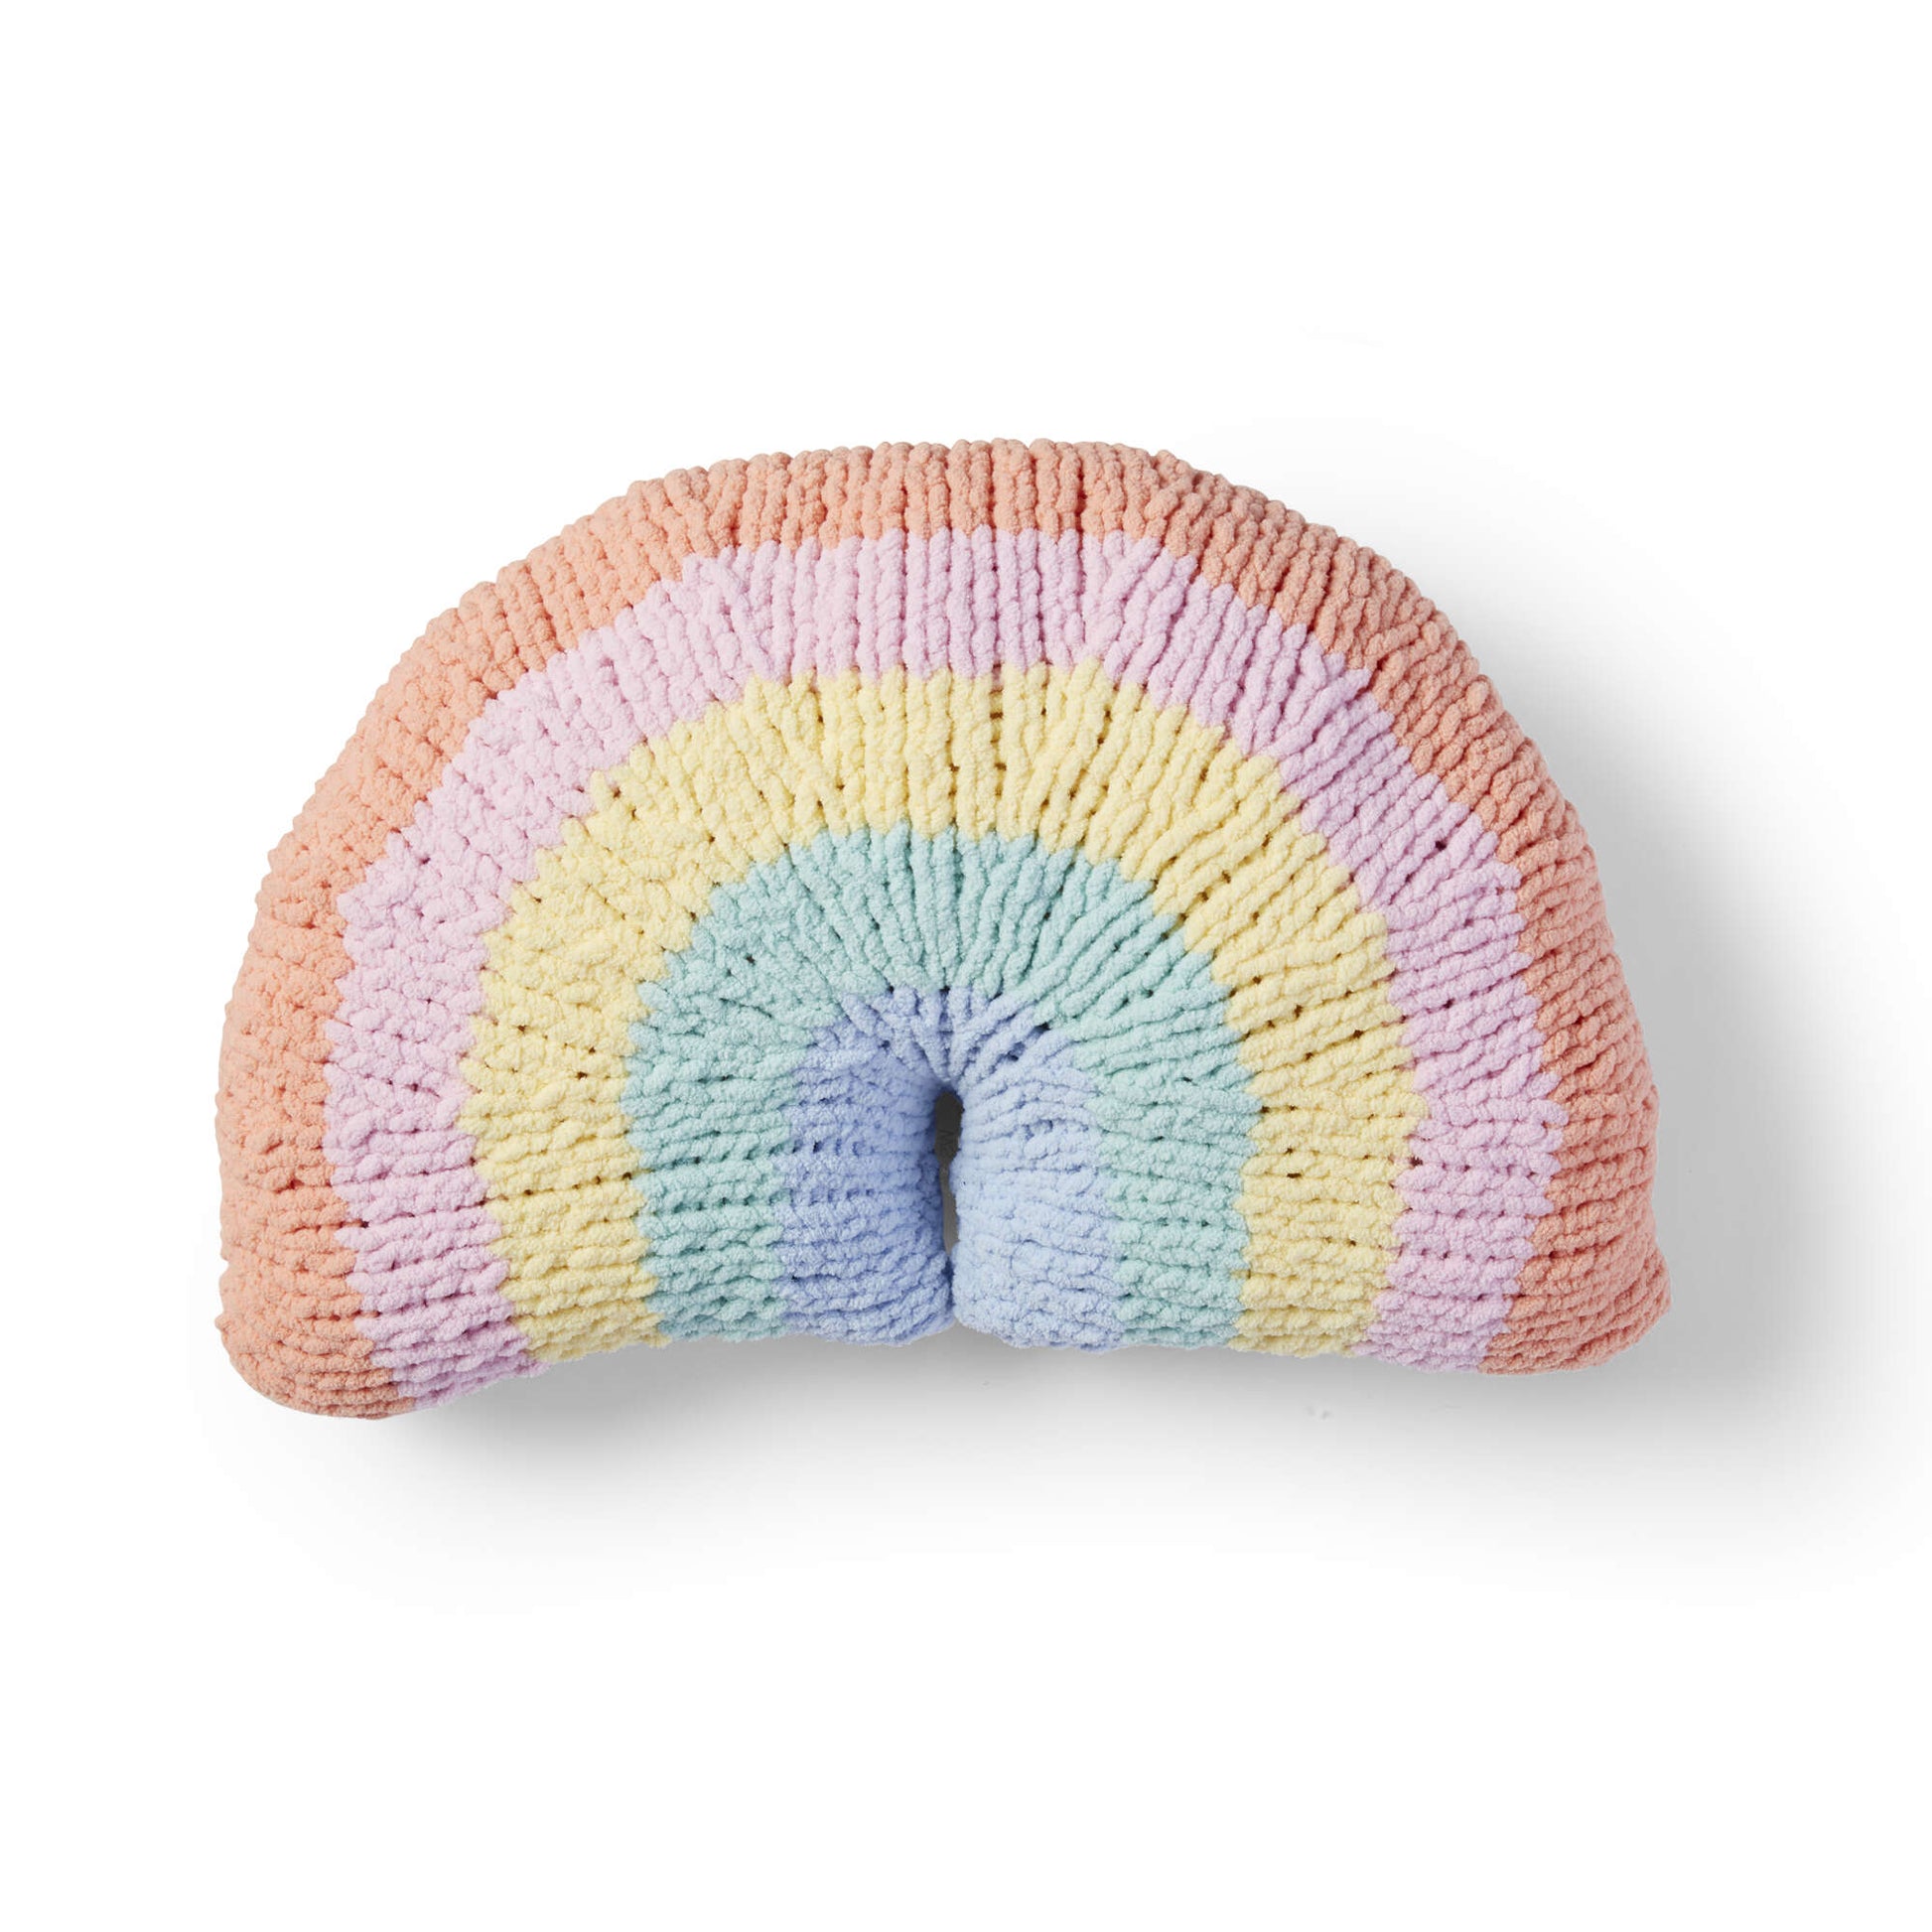 Bernat Knit Rainbow Pillow Knit Pillow made in Bernat Baby Blanket yarn